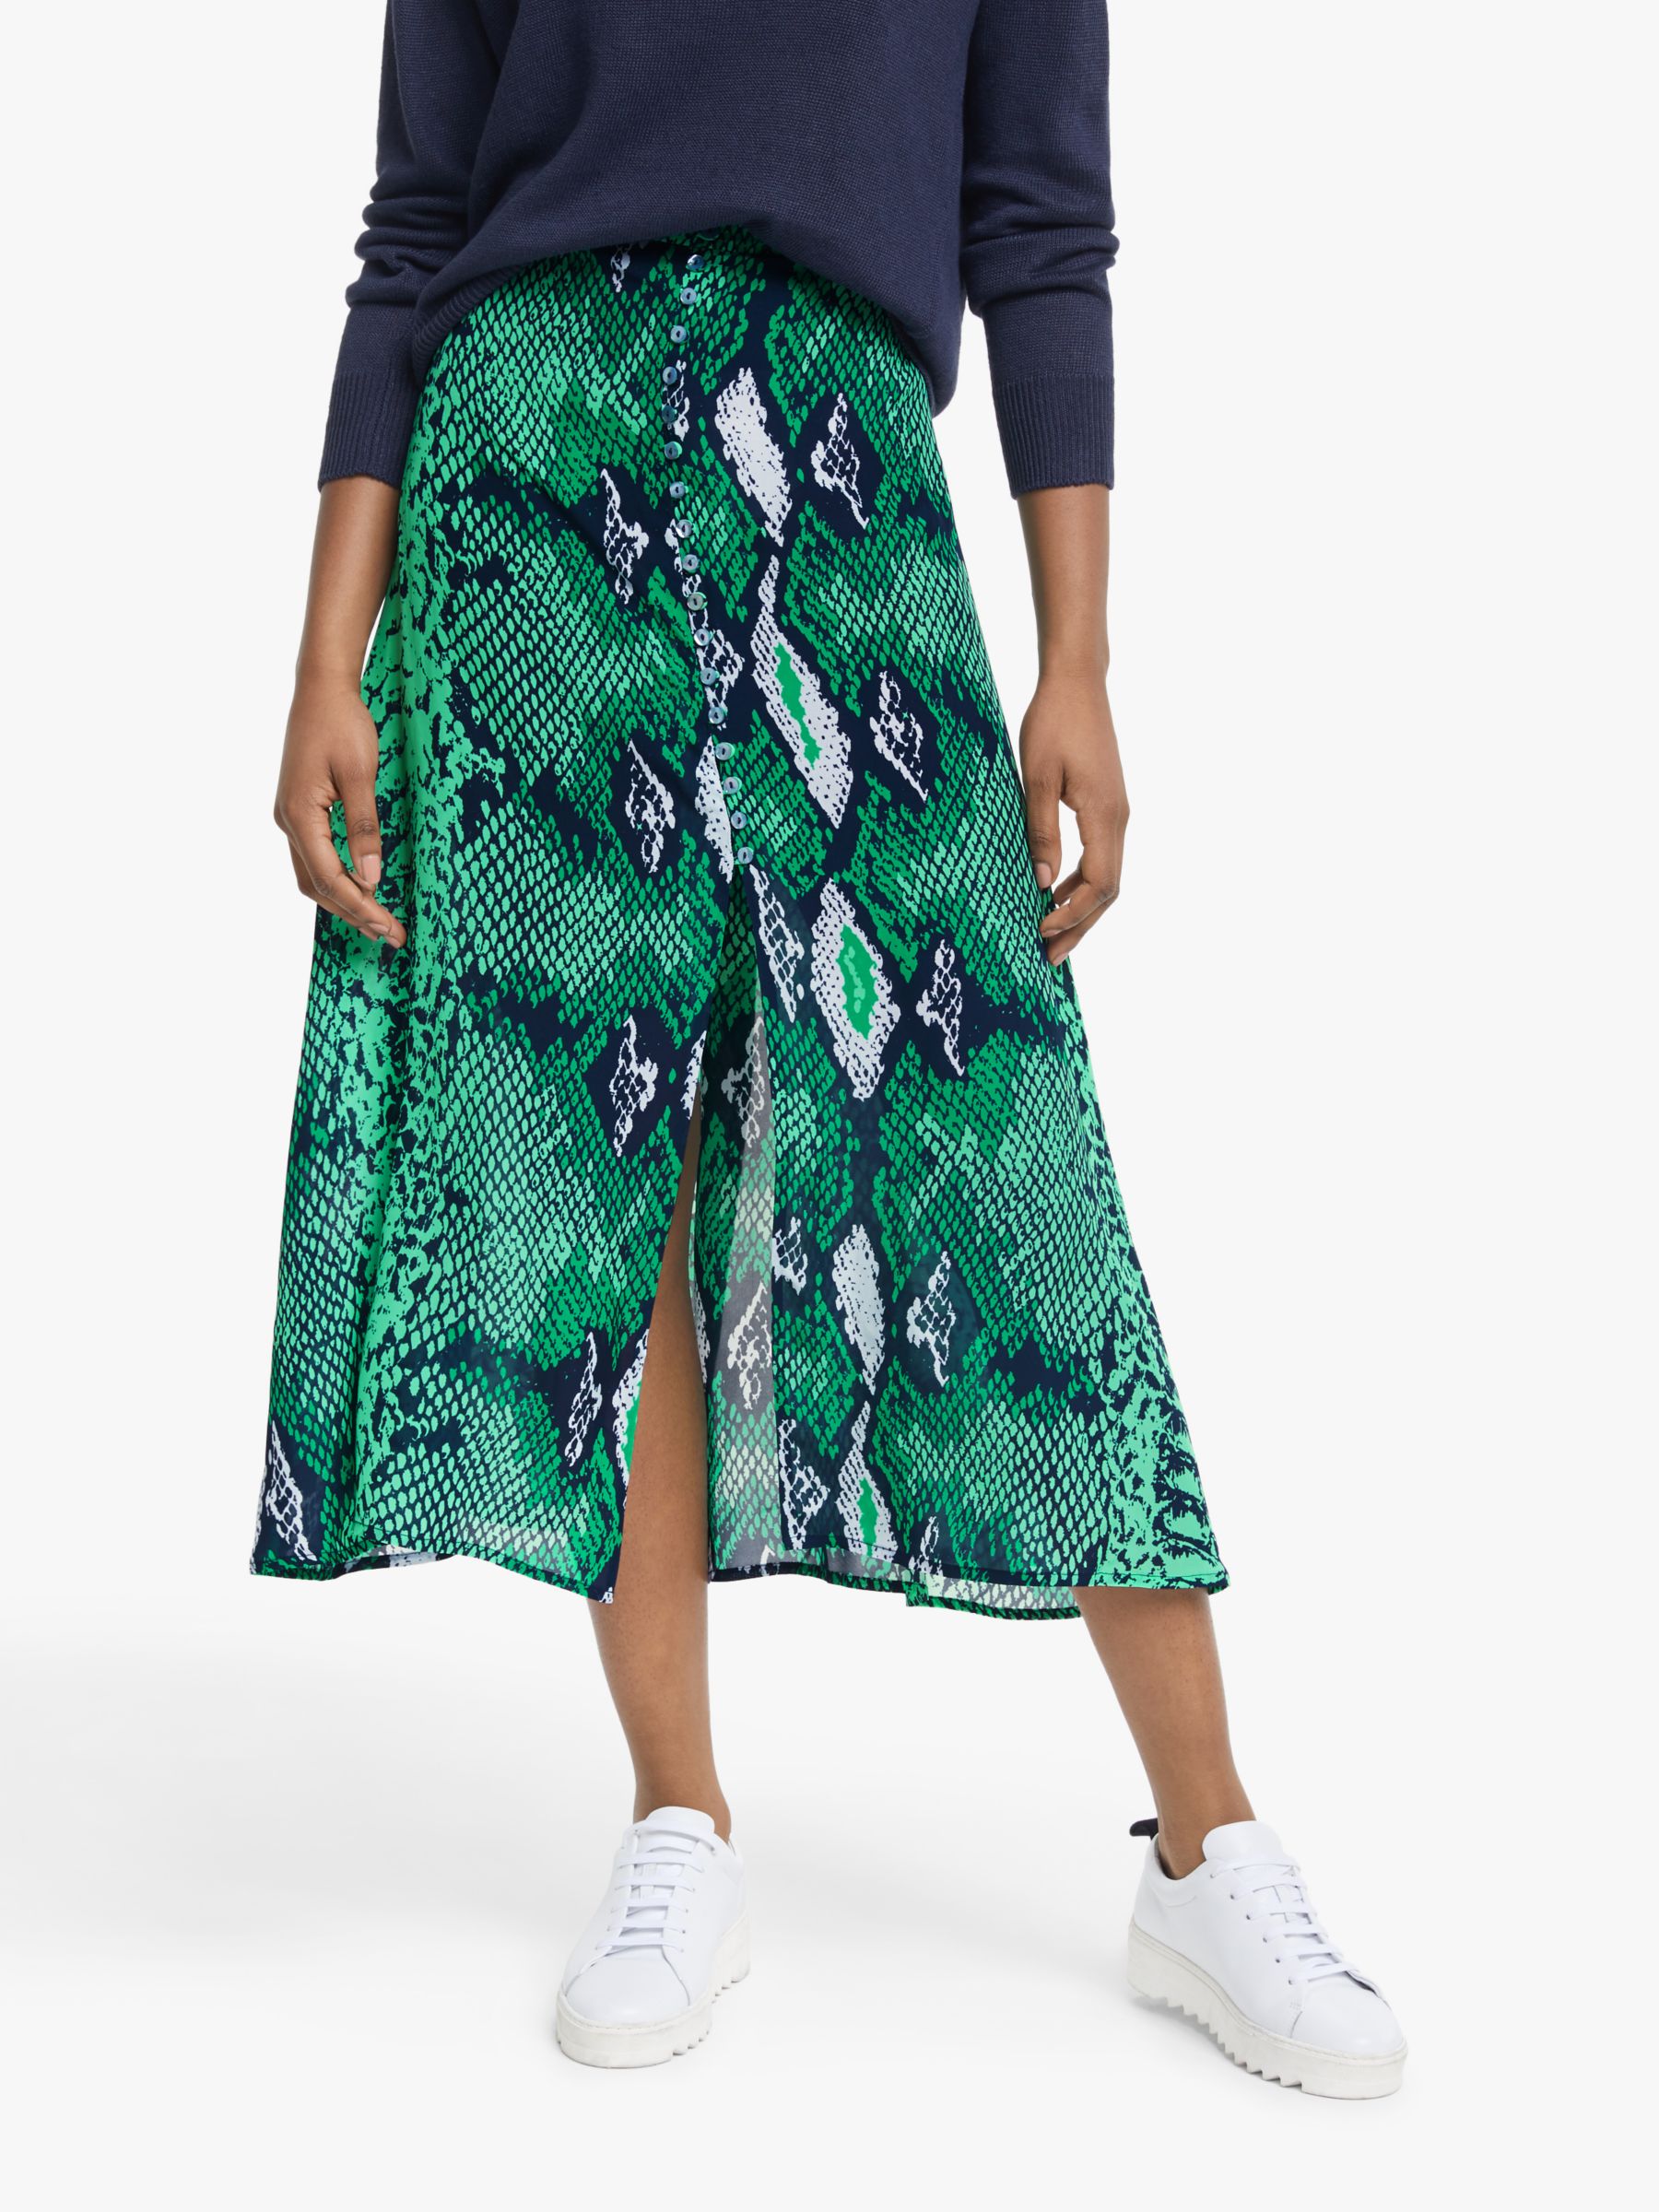 Mercy Delta Moulton Snake Print Skirt, Green at John Lewis & Partners